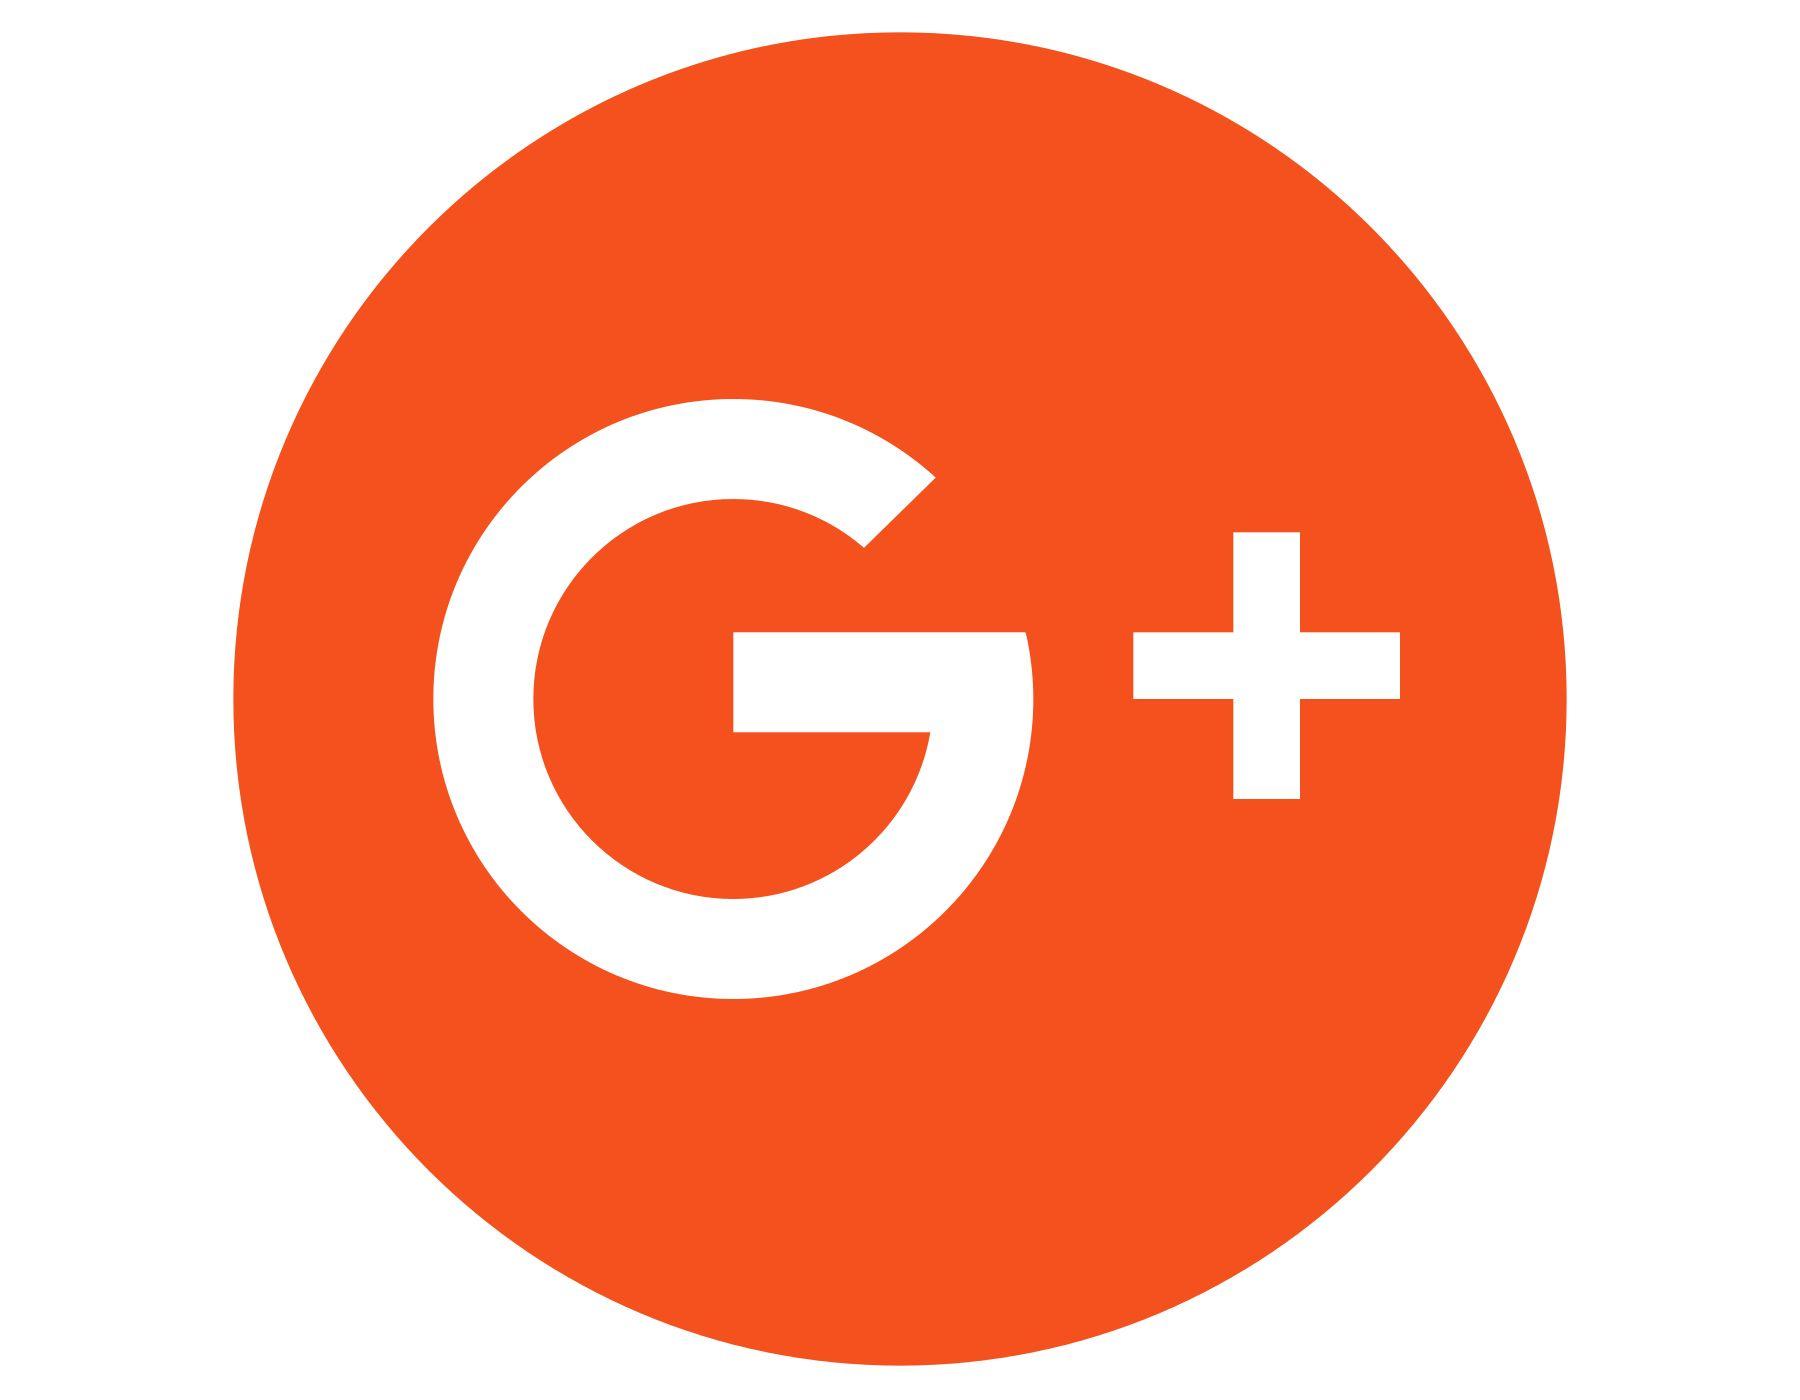 Google's Logo - Google Logo, Google Symbol Meaning, History and Evolution